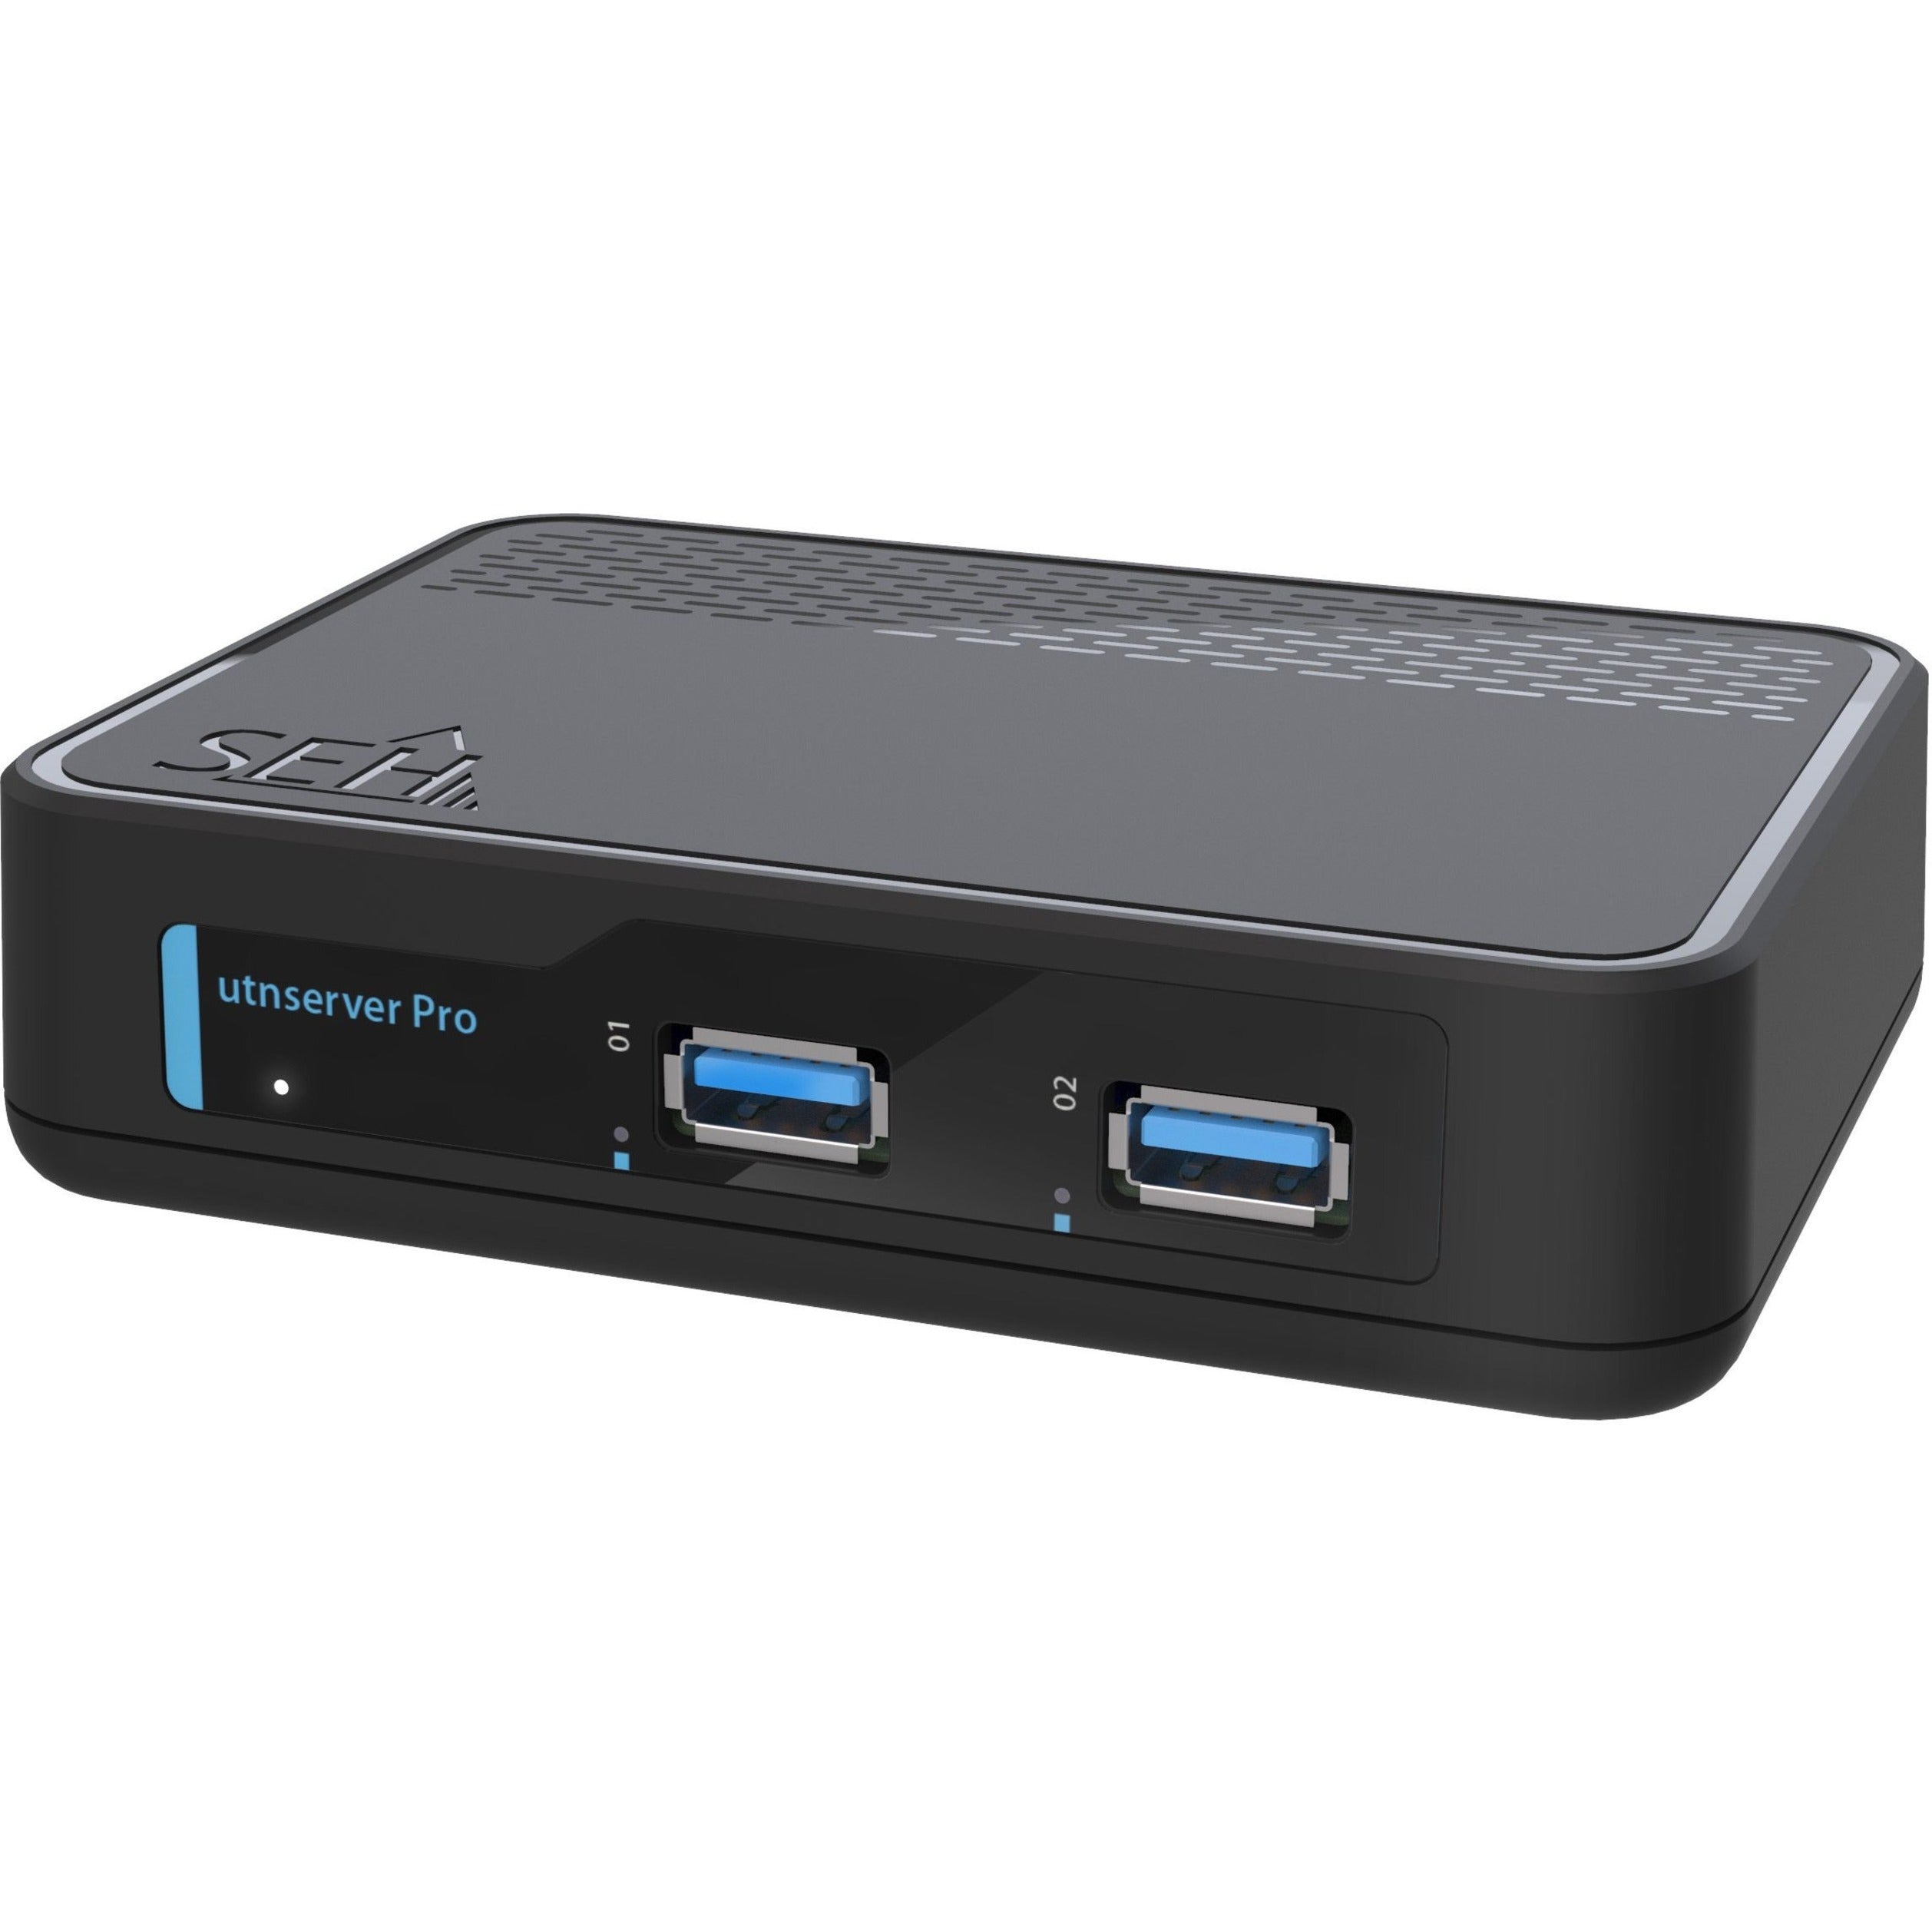 SEH M05132 utnserver Pro USB Device Server, Gigabit Ethernet, 10/100/1000Base-T, 5 Year Warranty